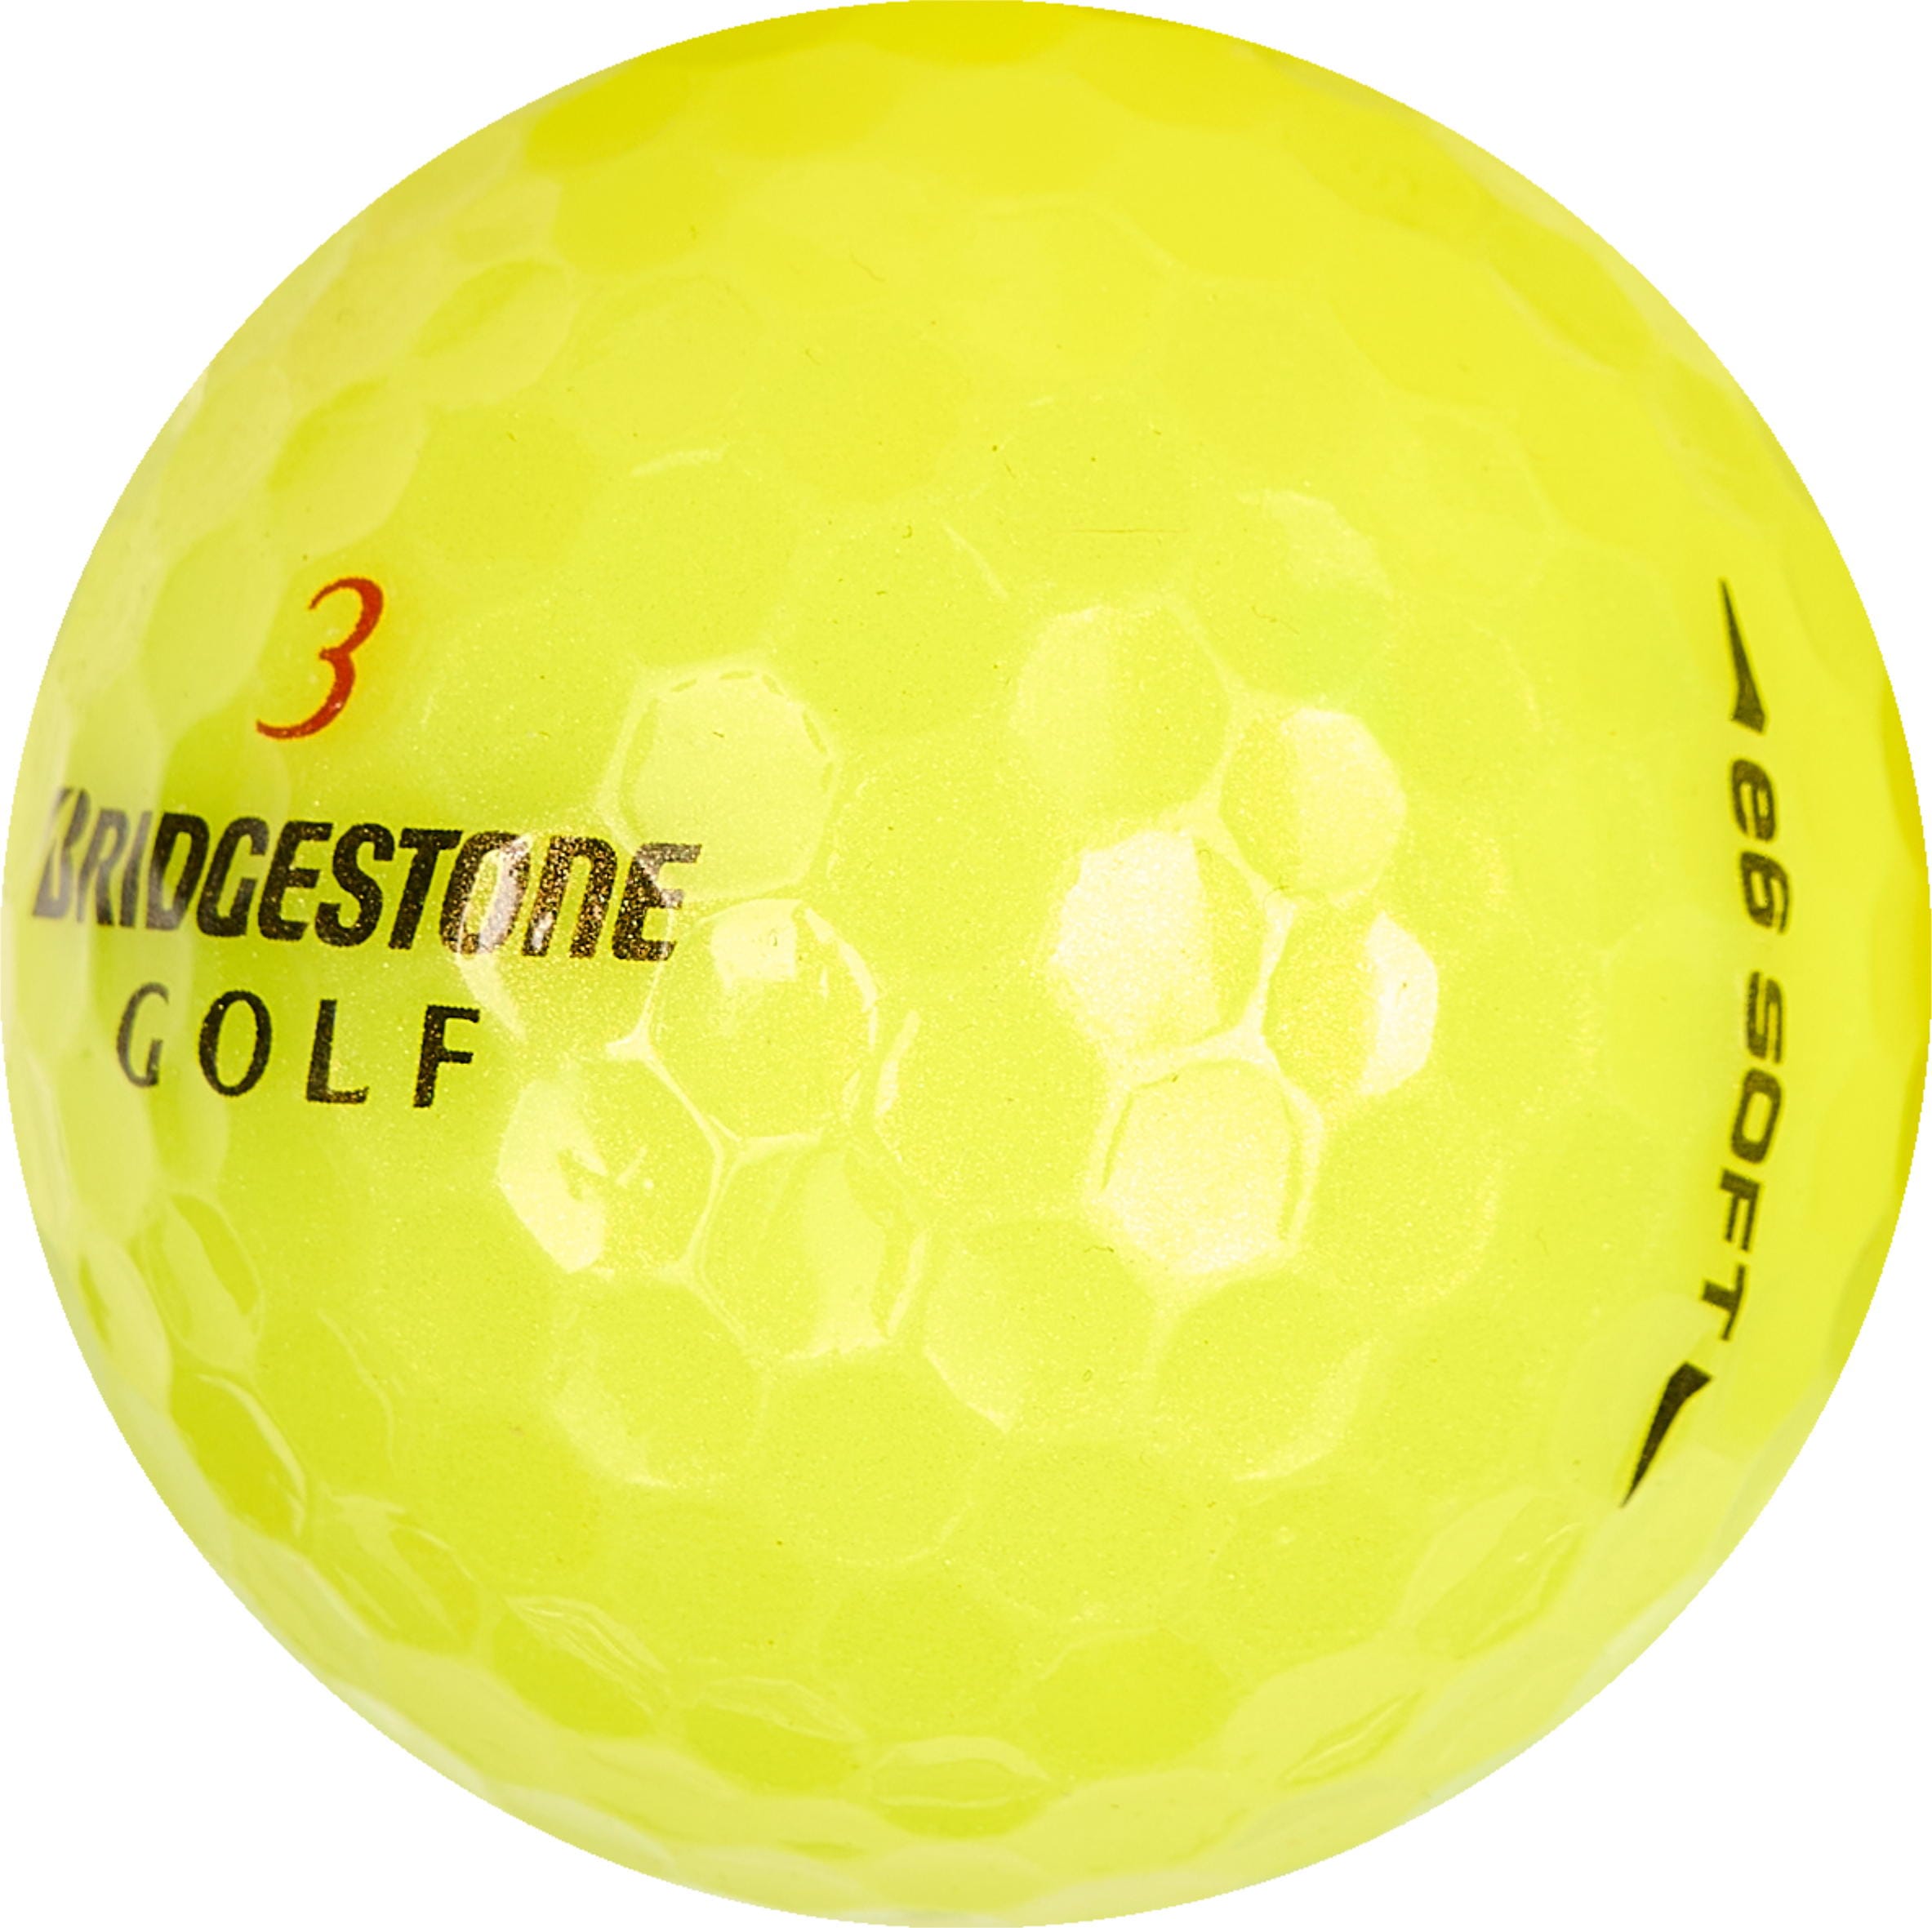 25 Bridgestone e6 Soft Lakeballs, Yellow